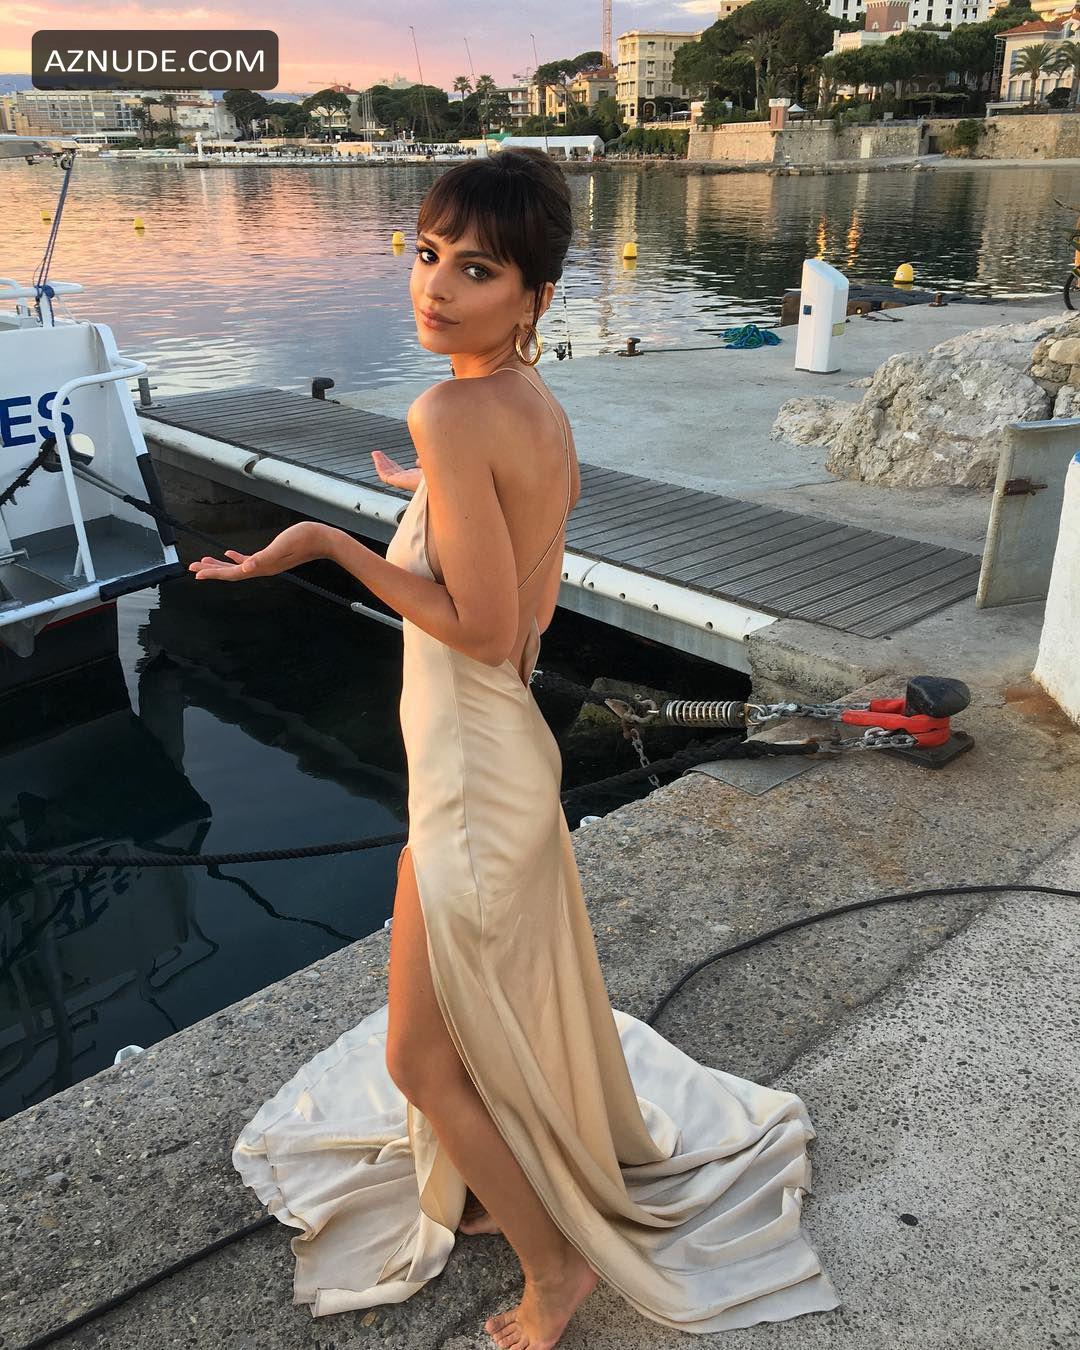 Emily Ratajkowski Sexy And Topless In Boat Aznude 